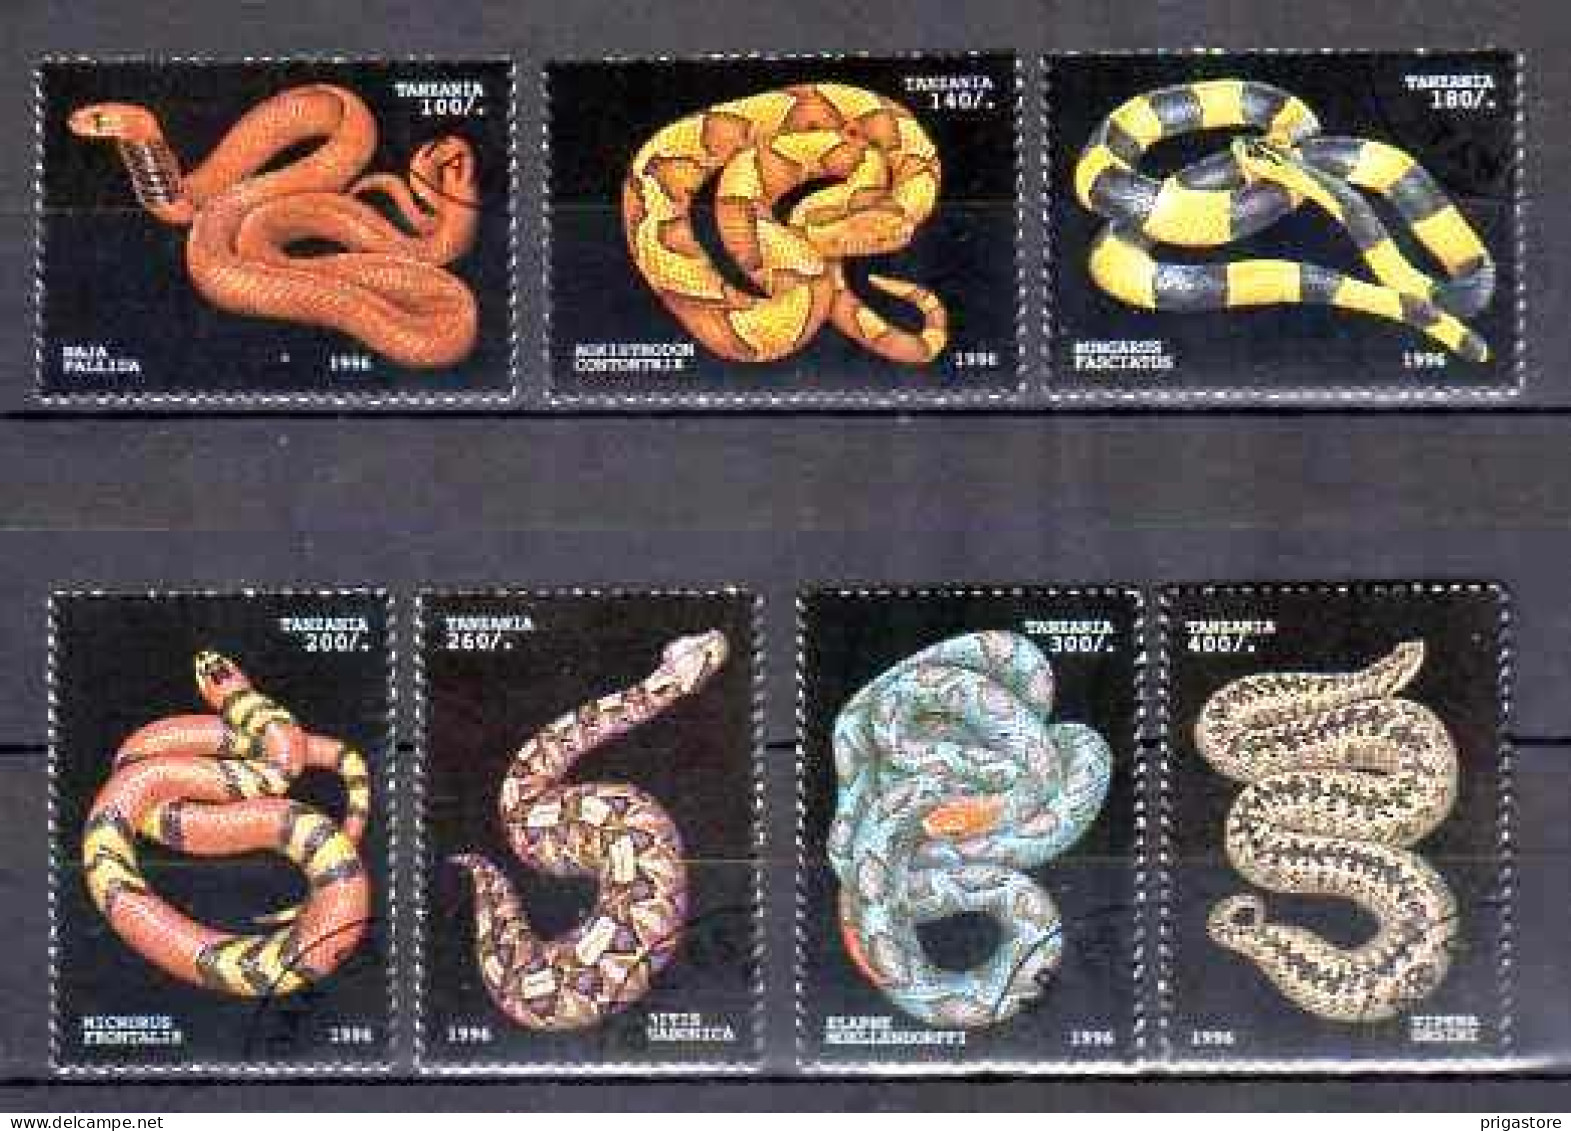 Animaux Serpents Tanzanie 1996 (48) Yvert N° 1969 à 1975 Oblitérés Used - Serpenti